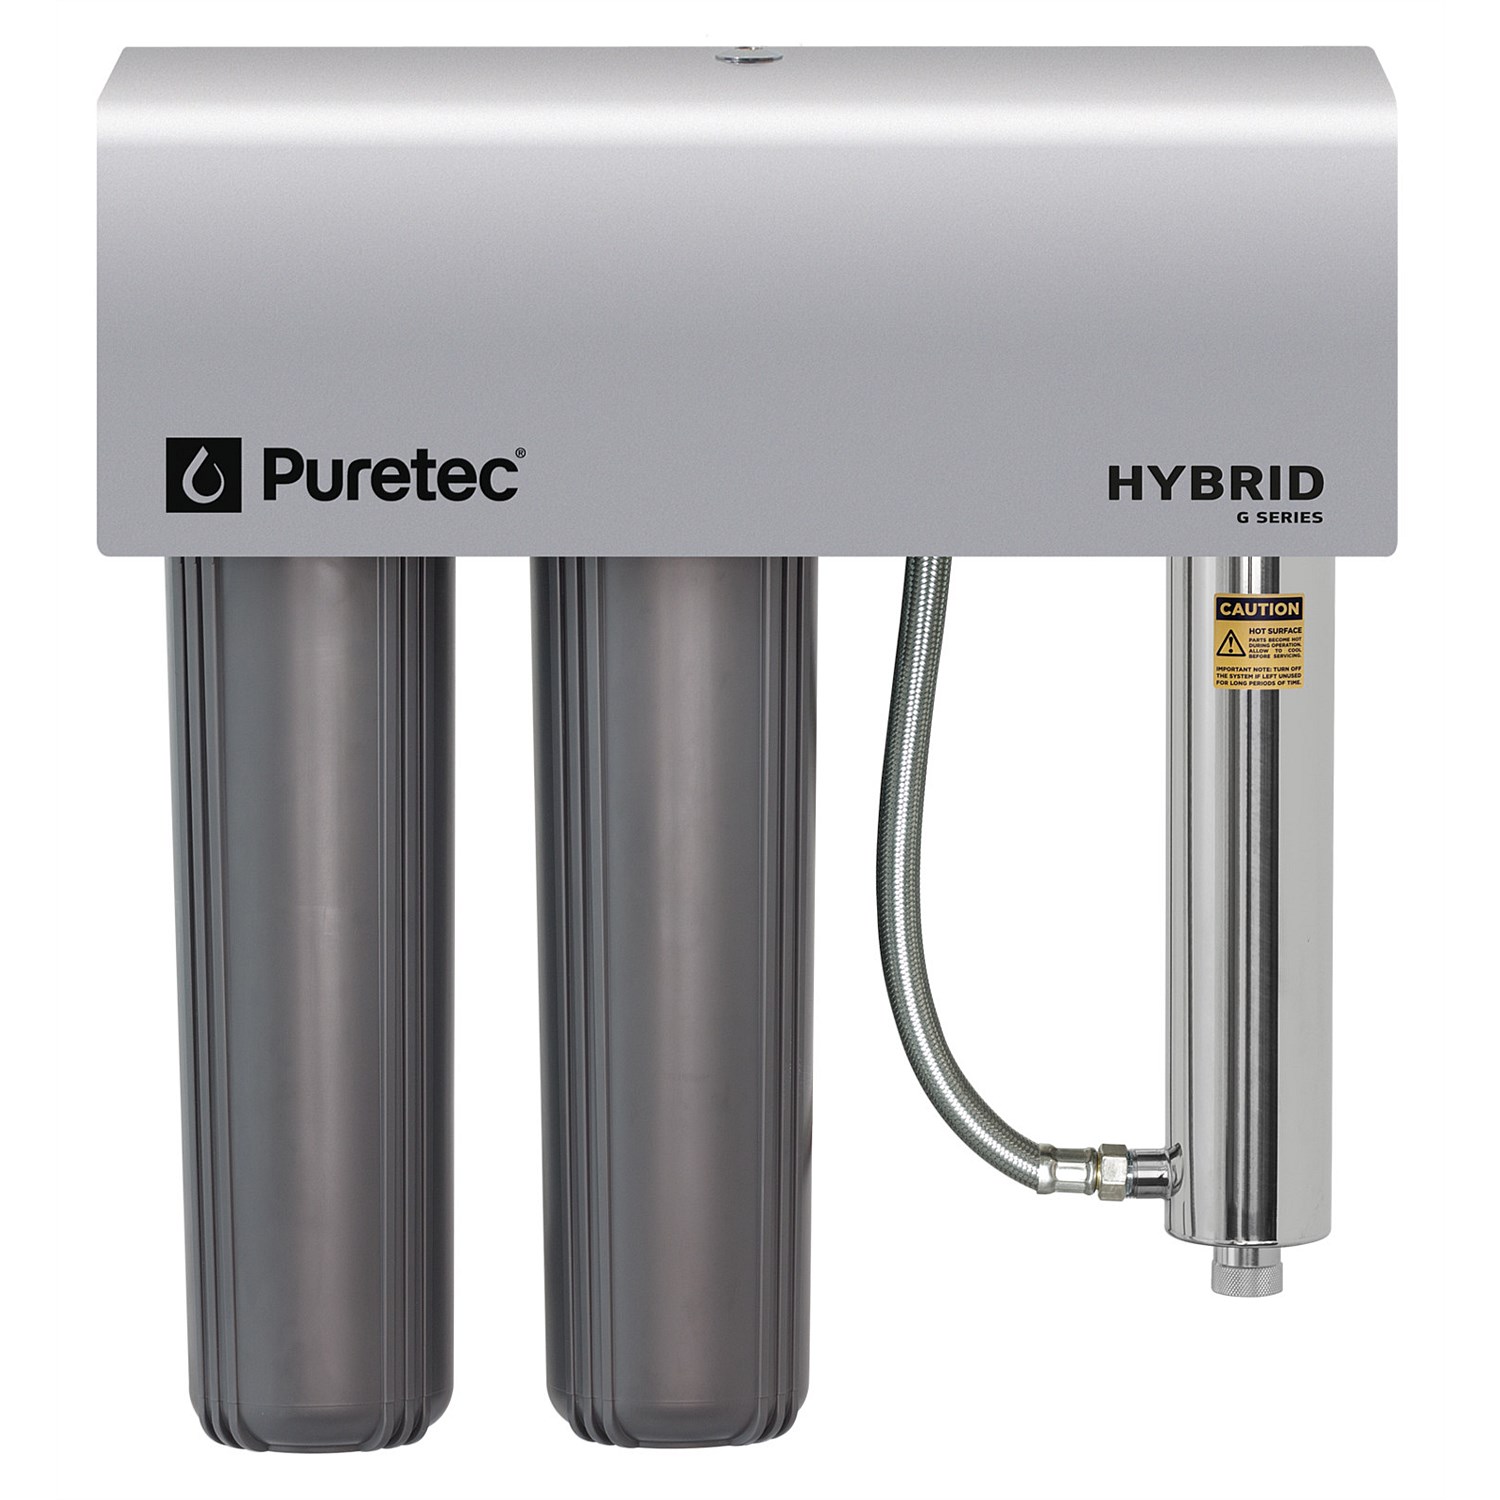 Puretec. Mizumi Water Encapsulated Hybrid UV Filters. Aerotank watertreatment. Hybrid g